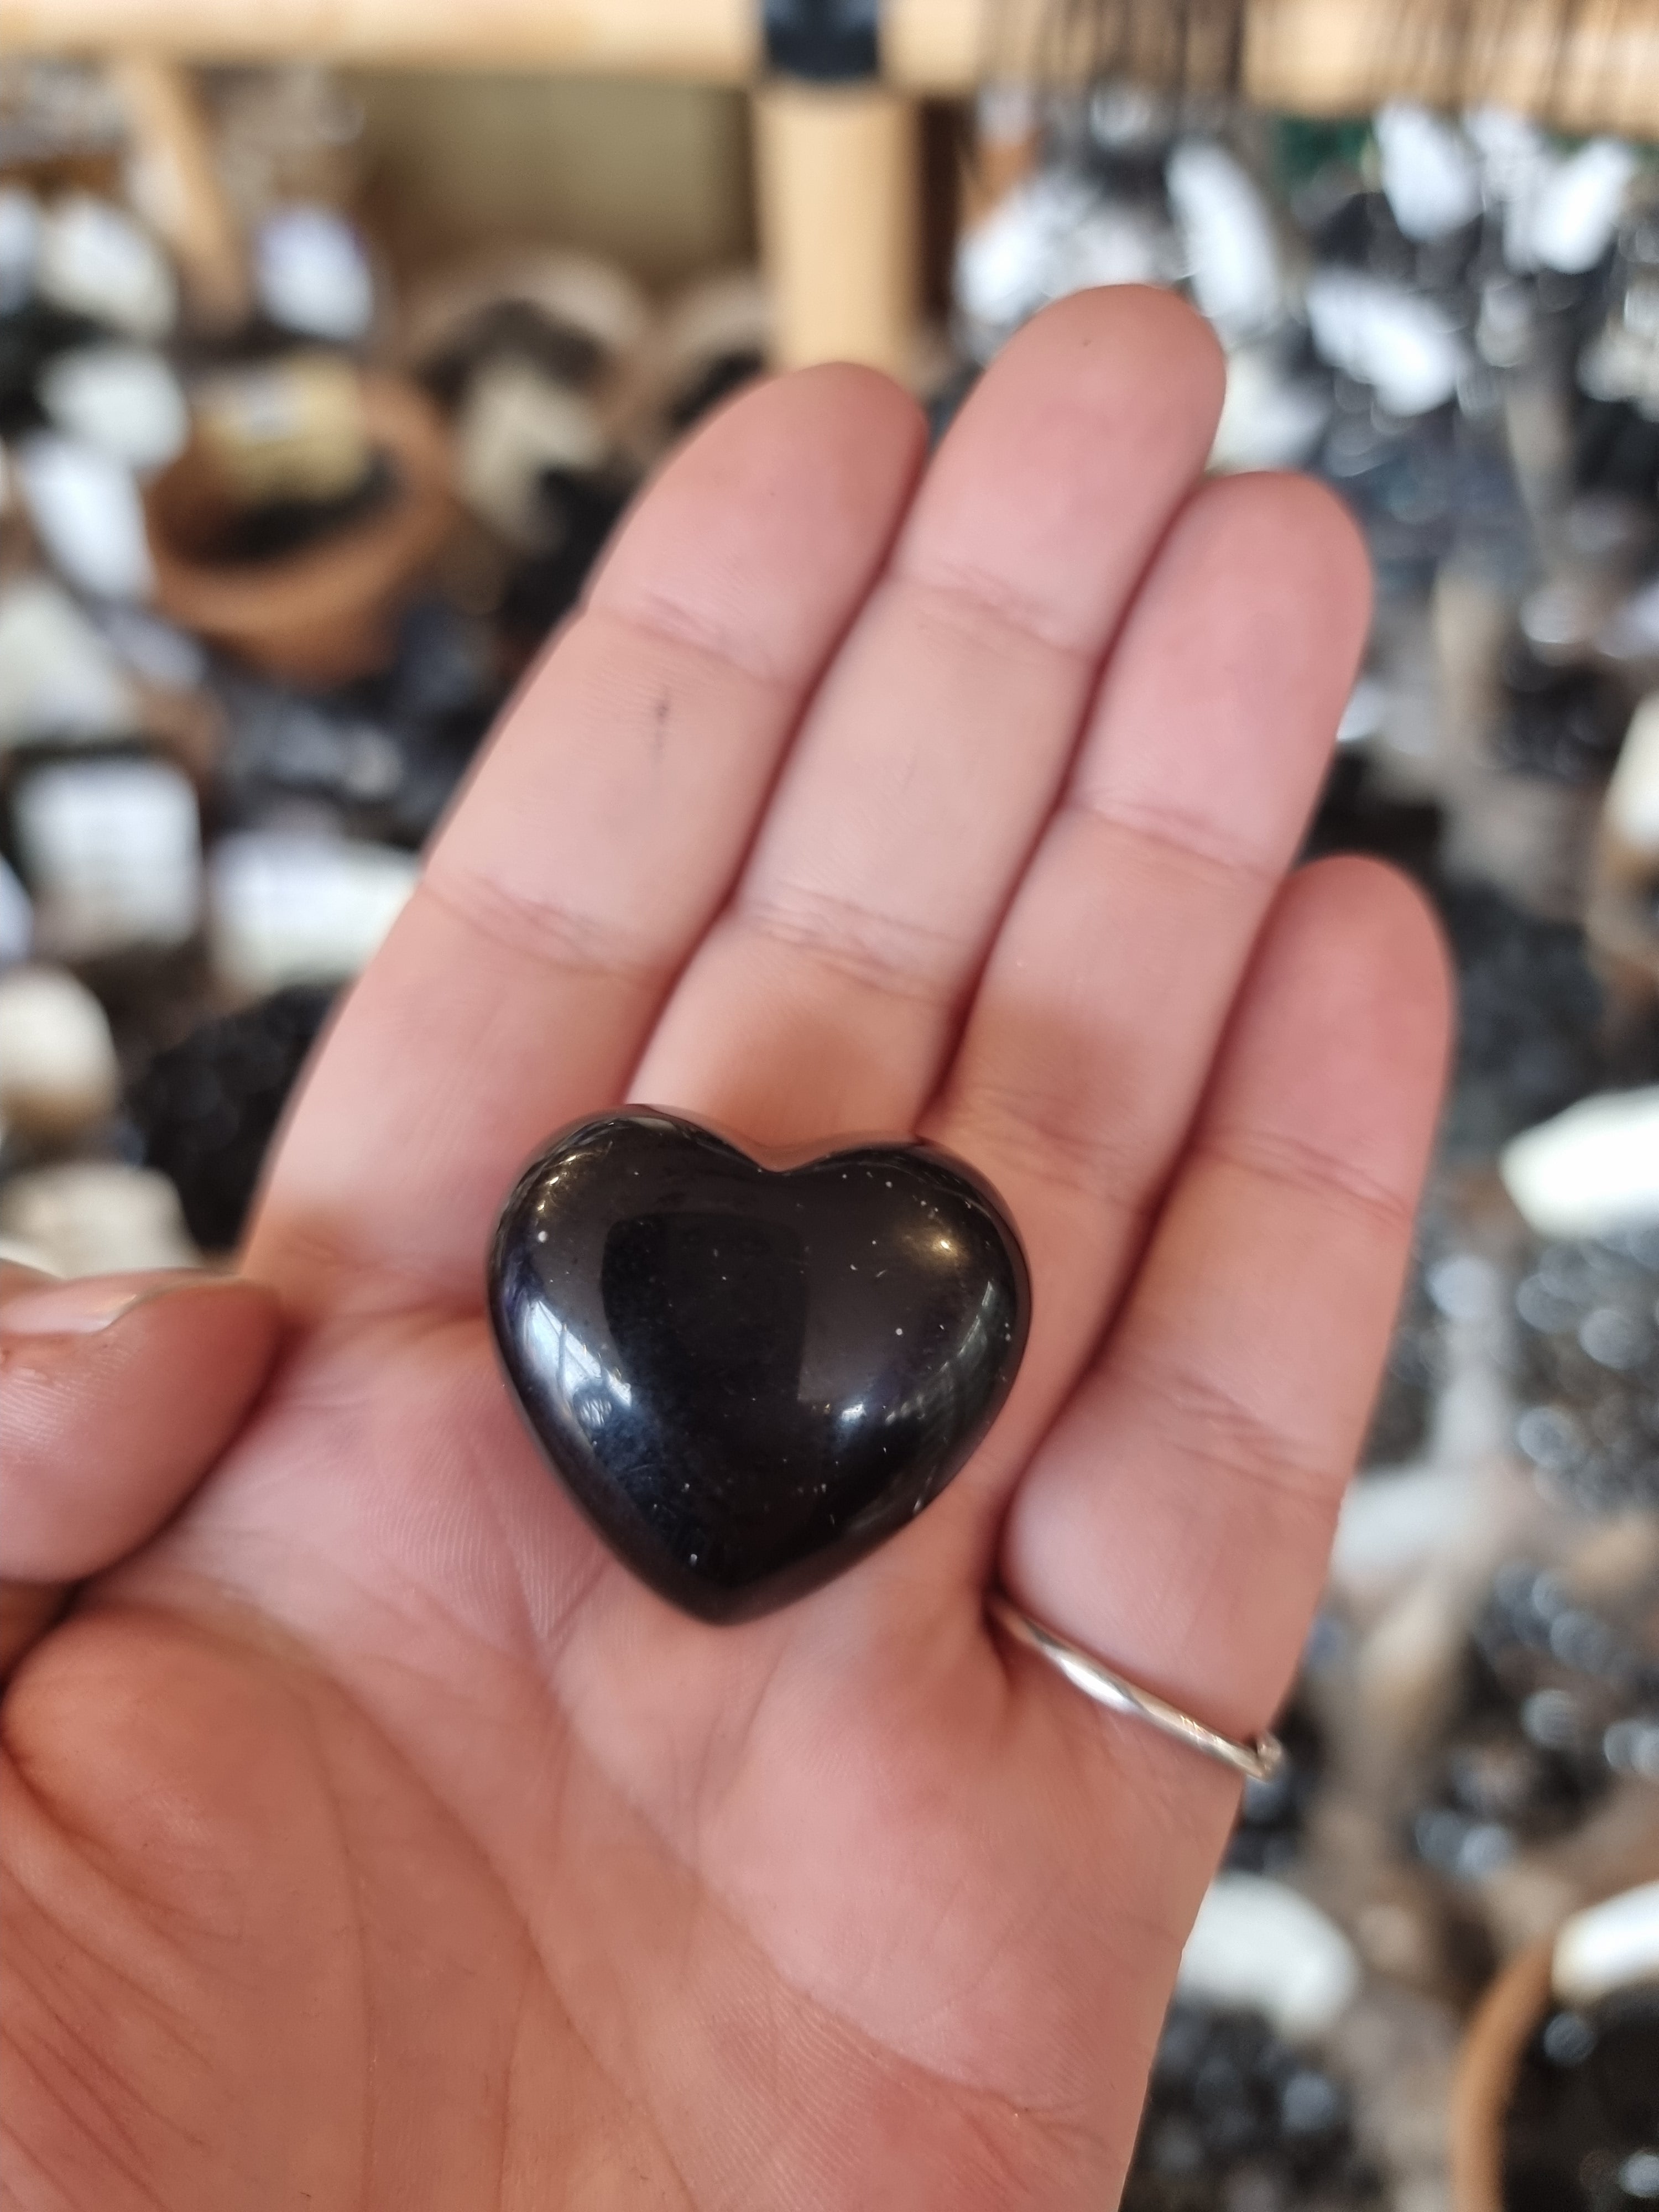 Obsidian Heart (Small)